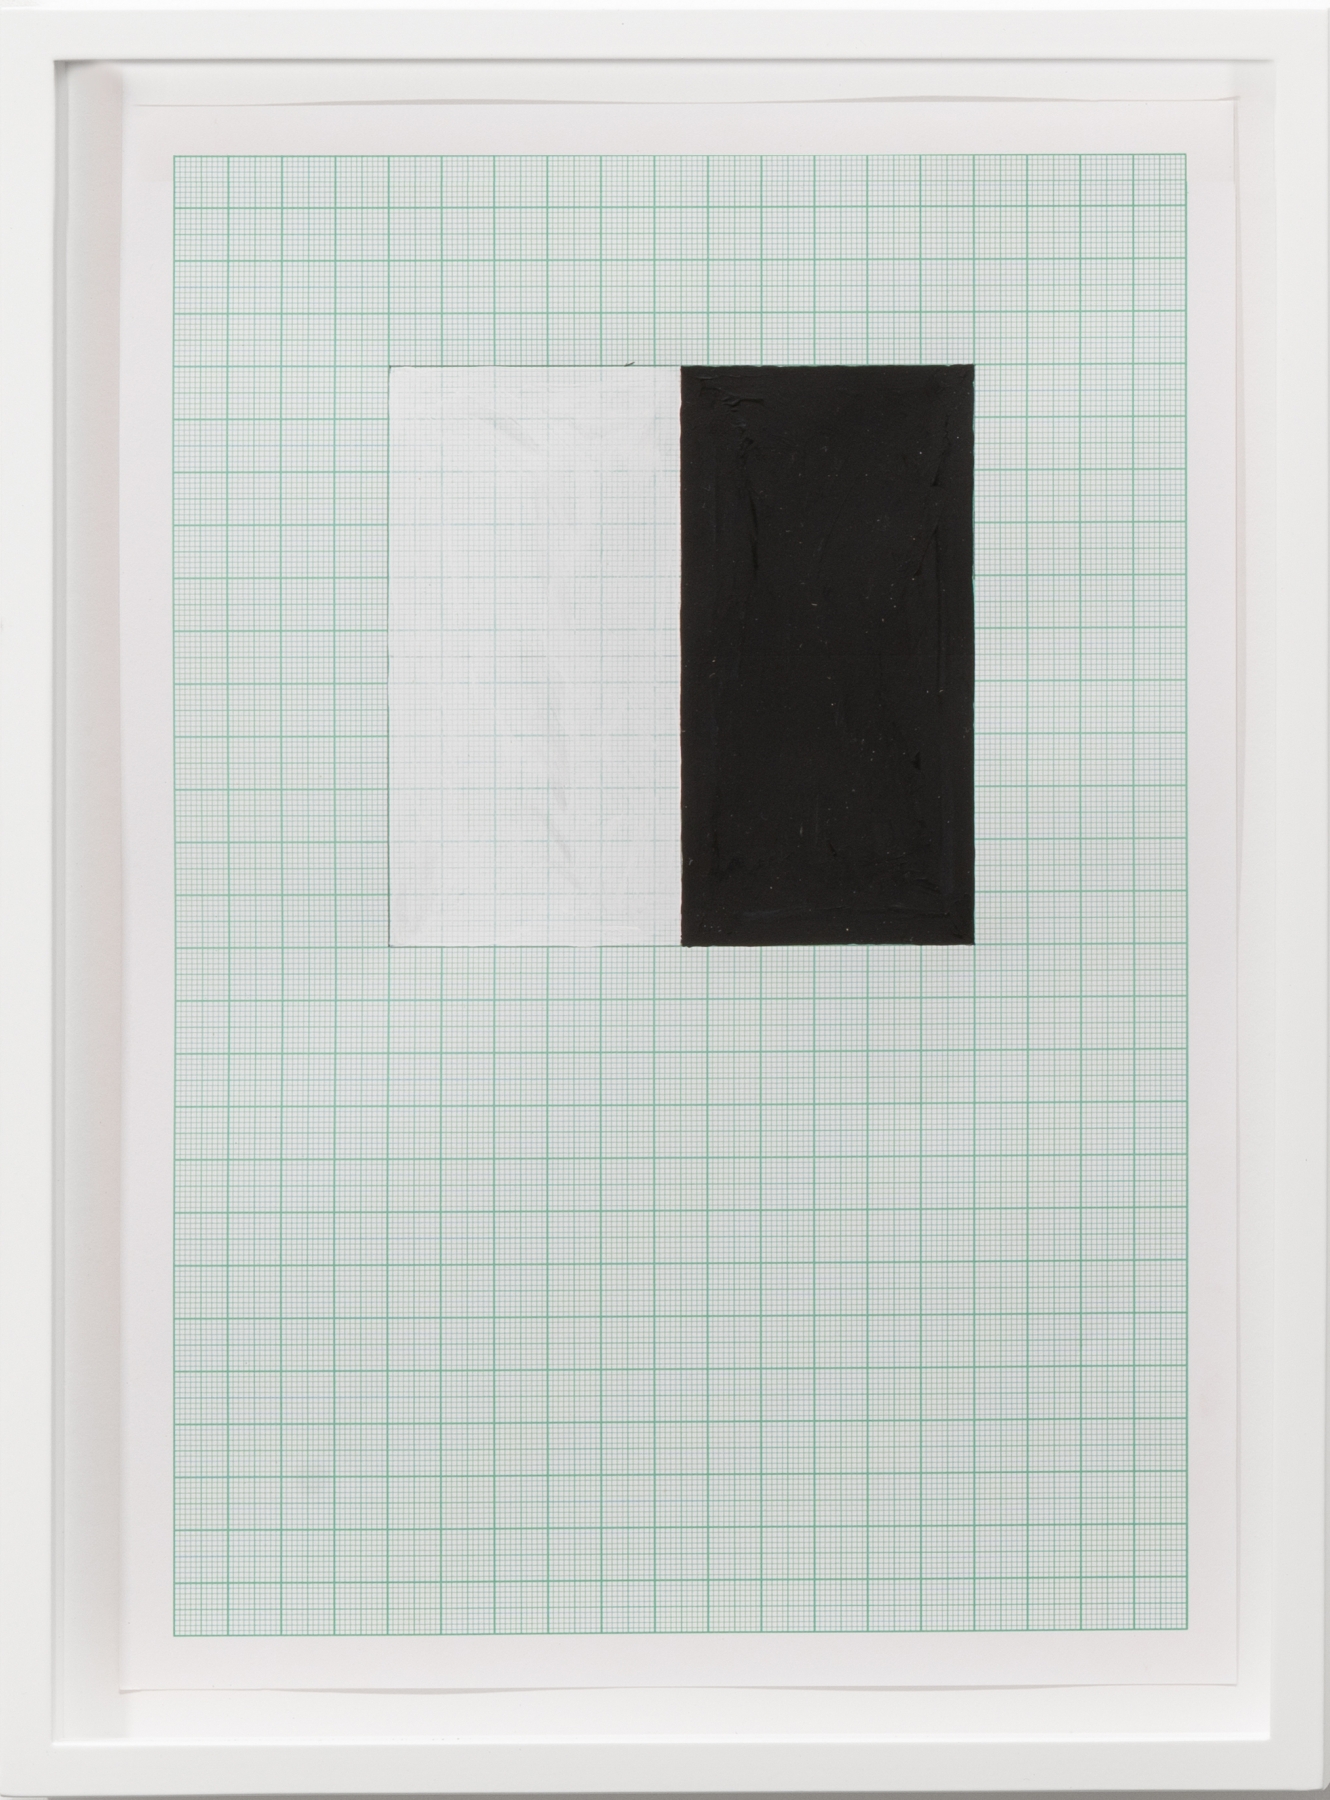 Vertical Divide, 2022

Watercolour on graph paper

Frame: 30 x 20 cm / 11.8 x 7.9 in.

Enquiries